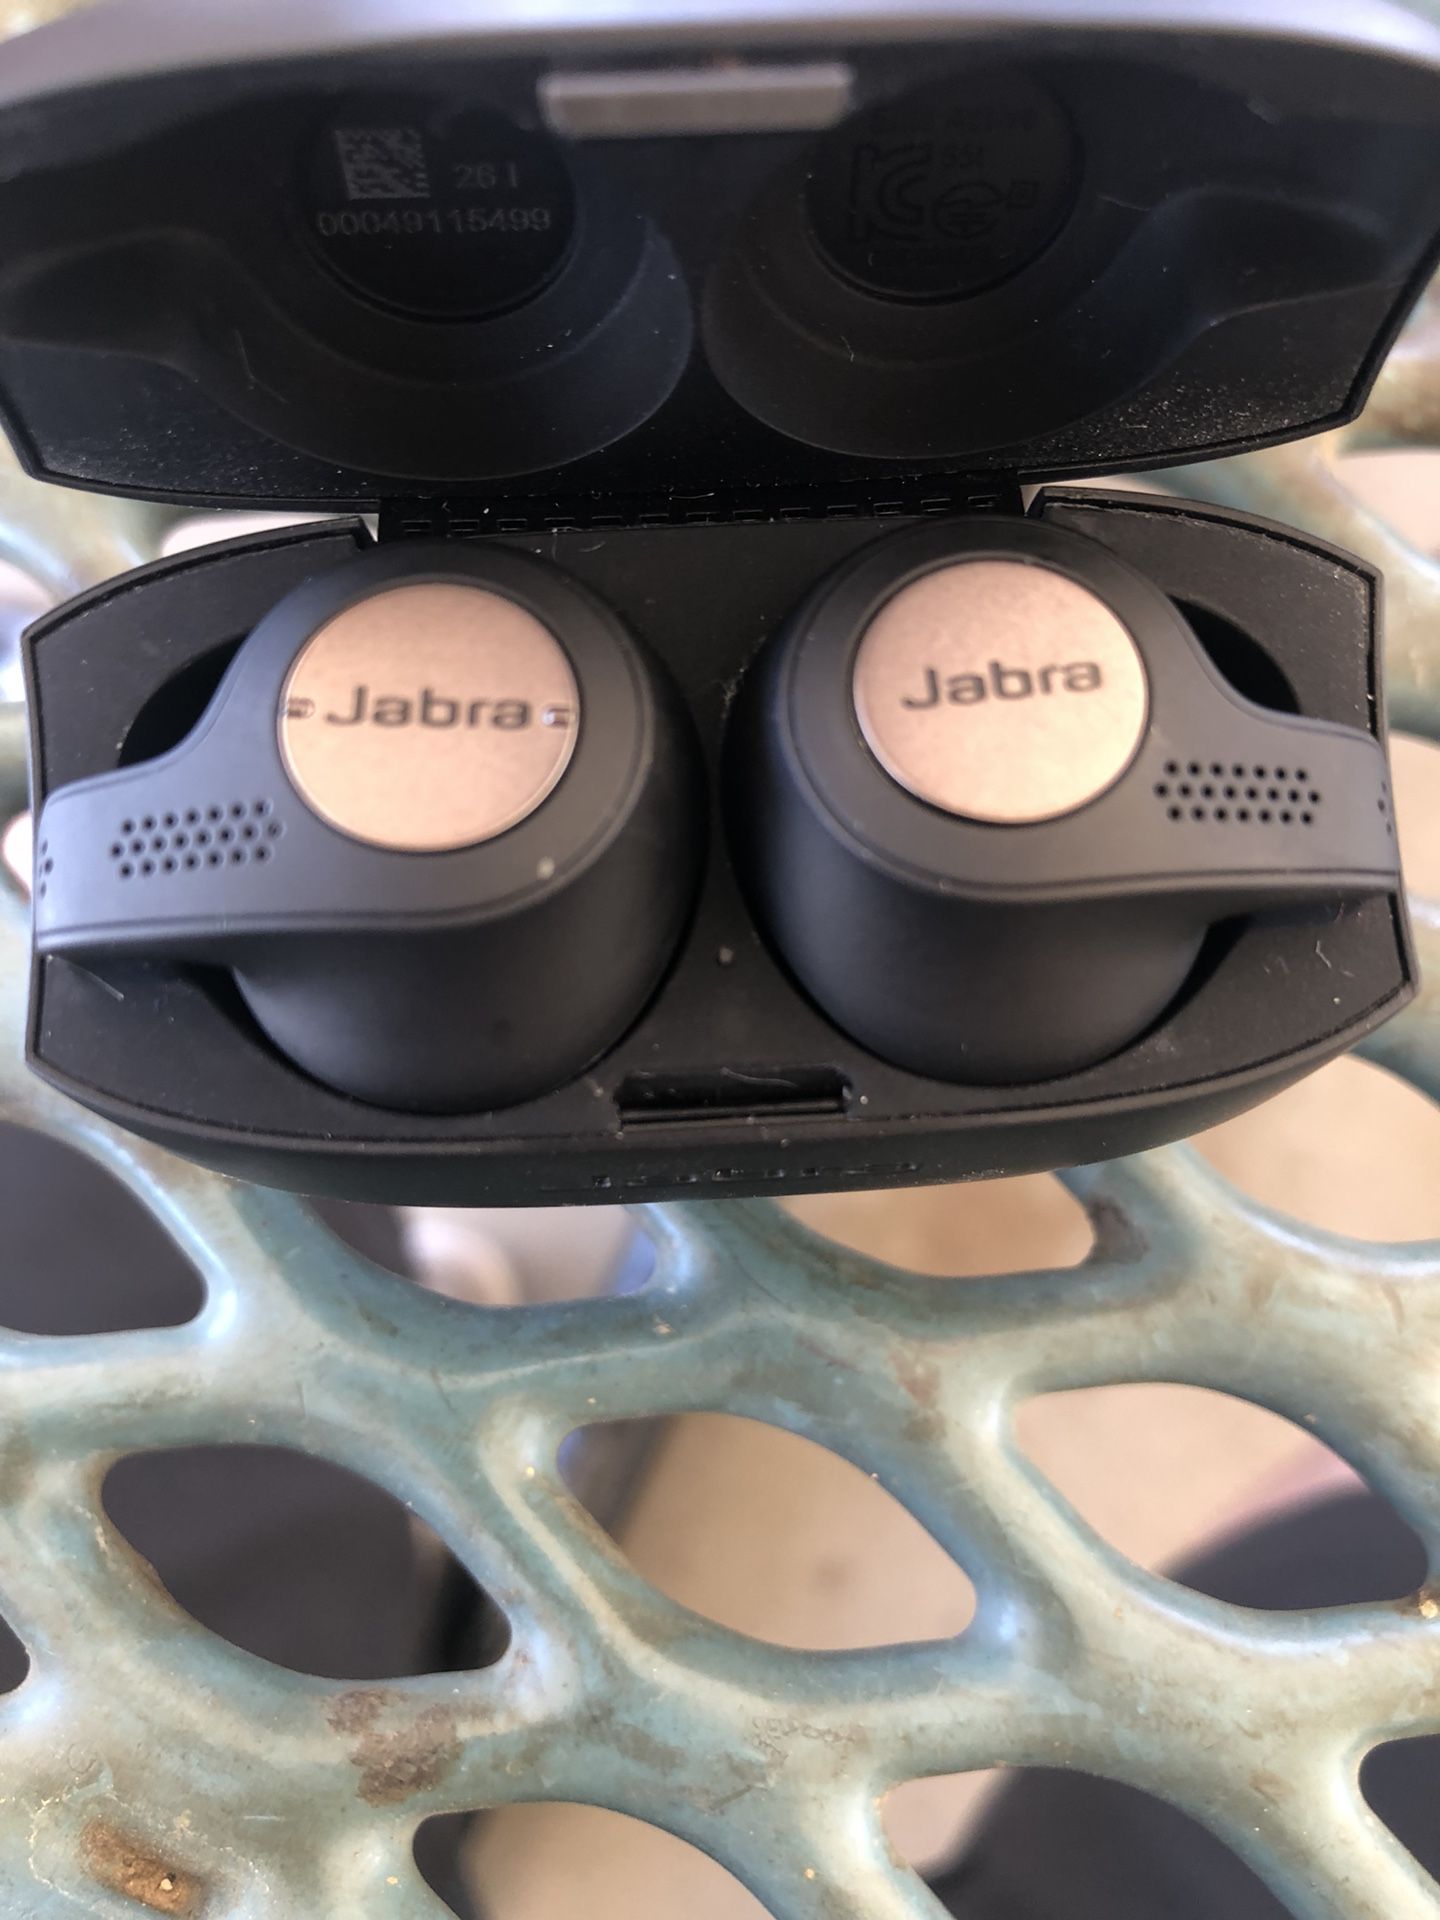 Jabra headphones